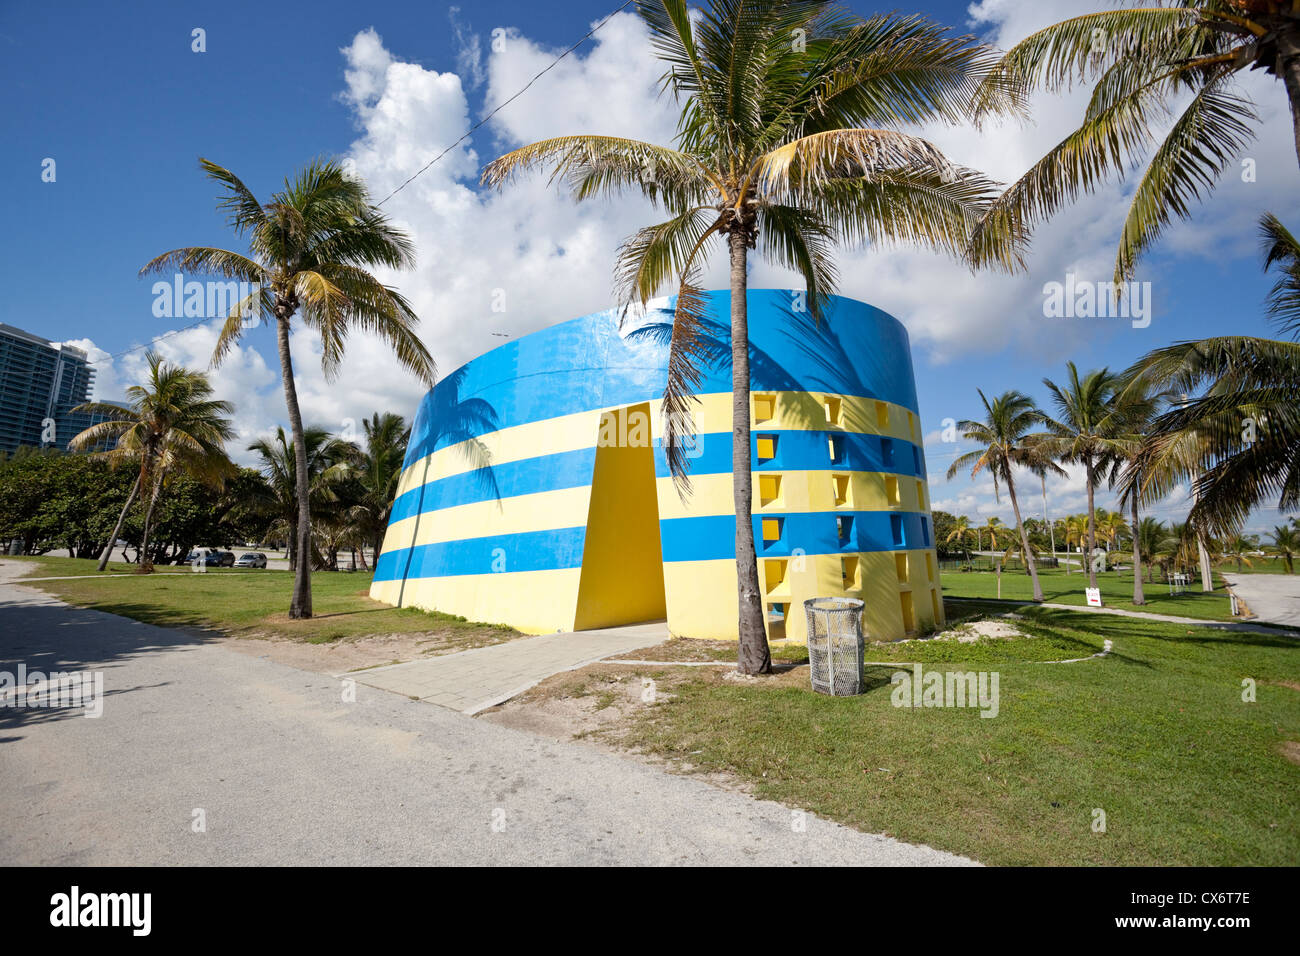 Public restrooms on Fisher Pier, Haulover Beach, Miami, Florida, USA Stock Photo